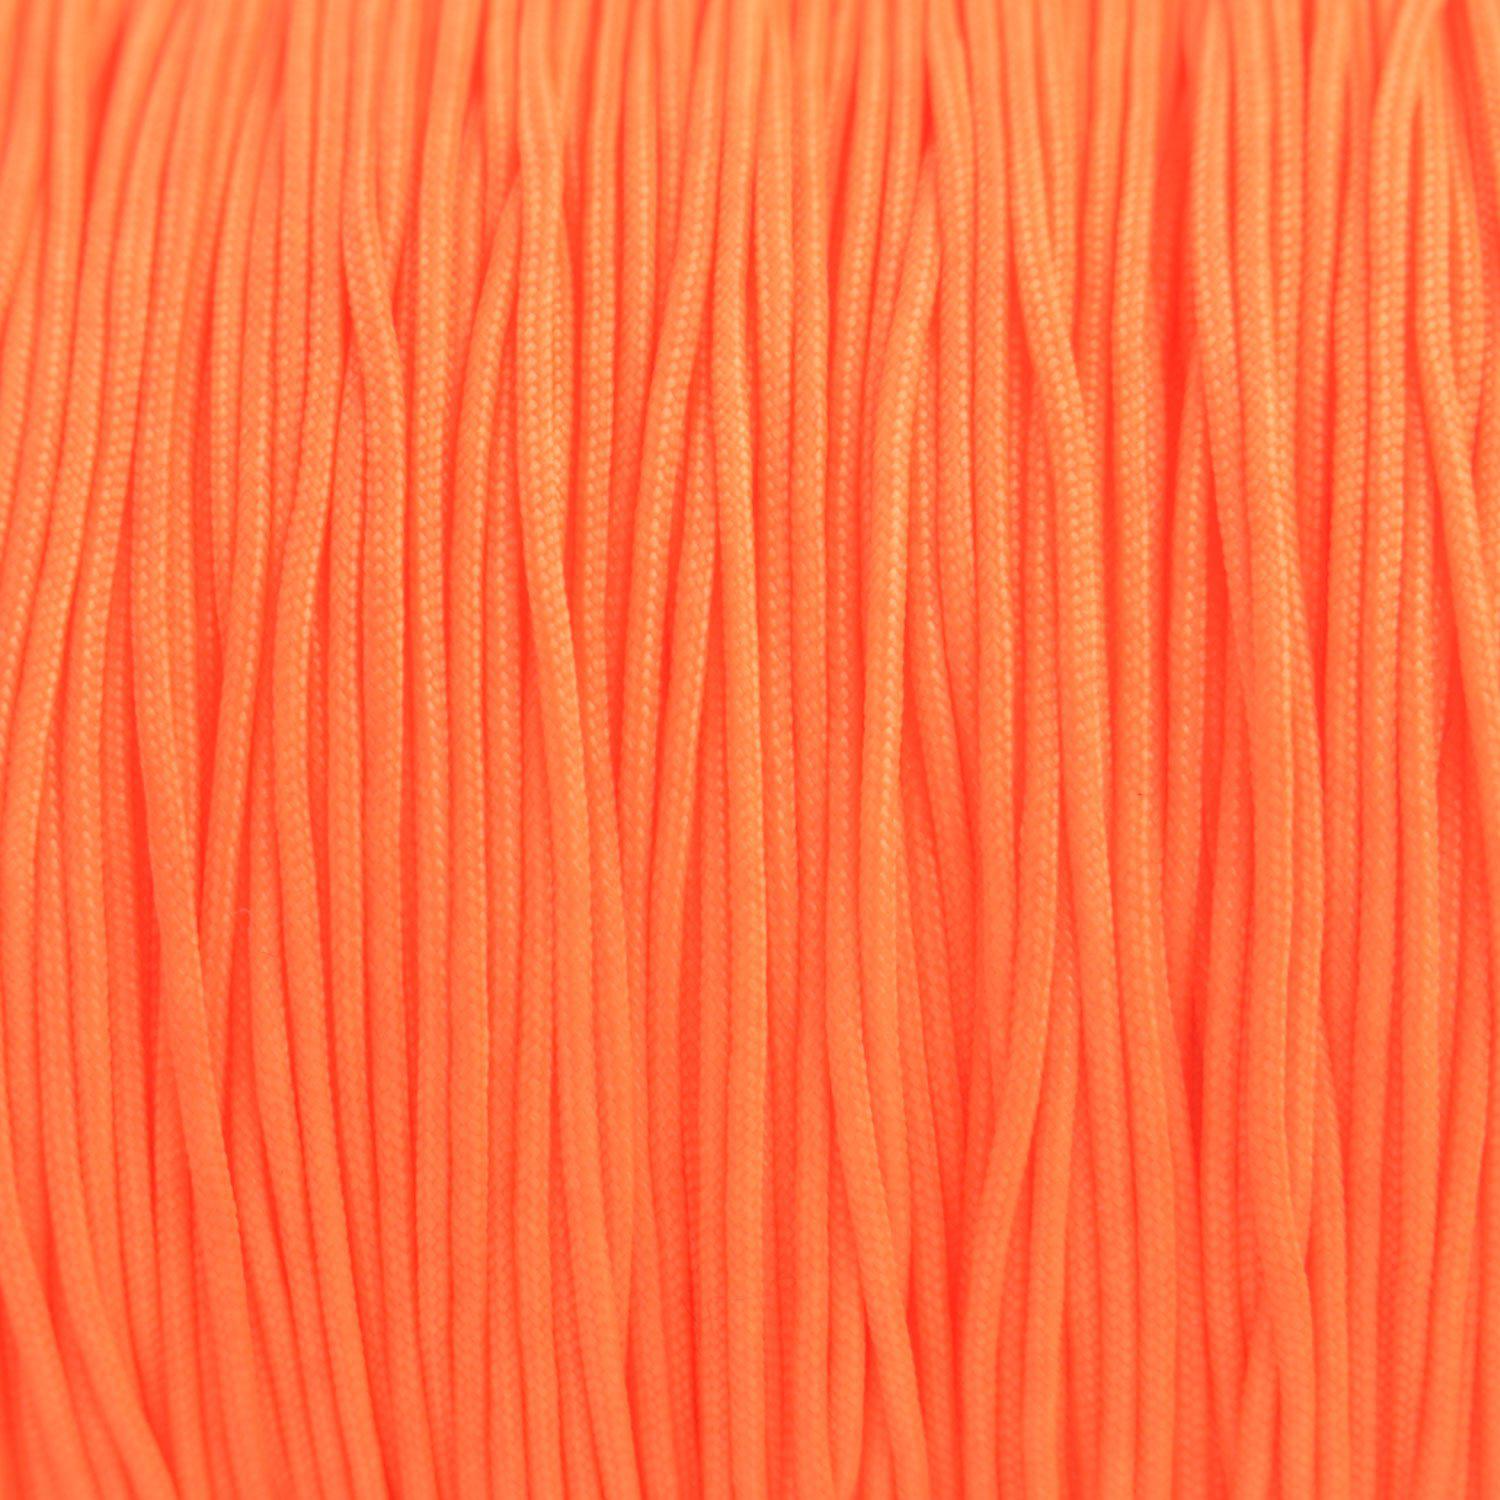 Rol nylon rattail koord fluor oranje 0.8mm - 90 meter-Kraaltjes van Renate